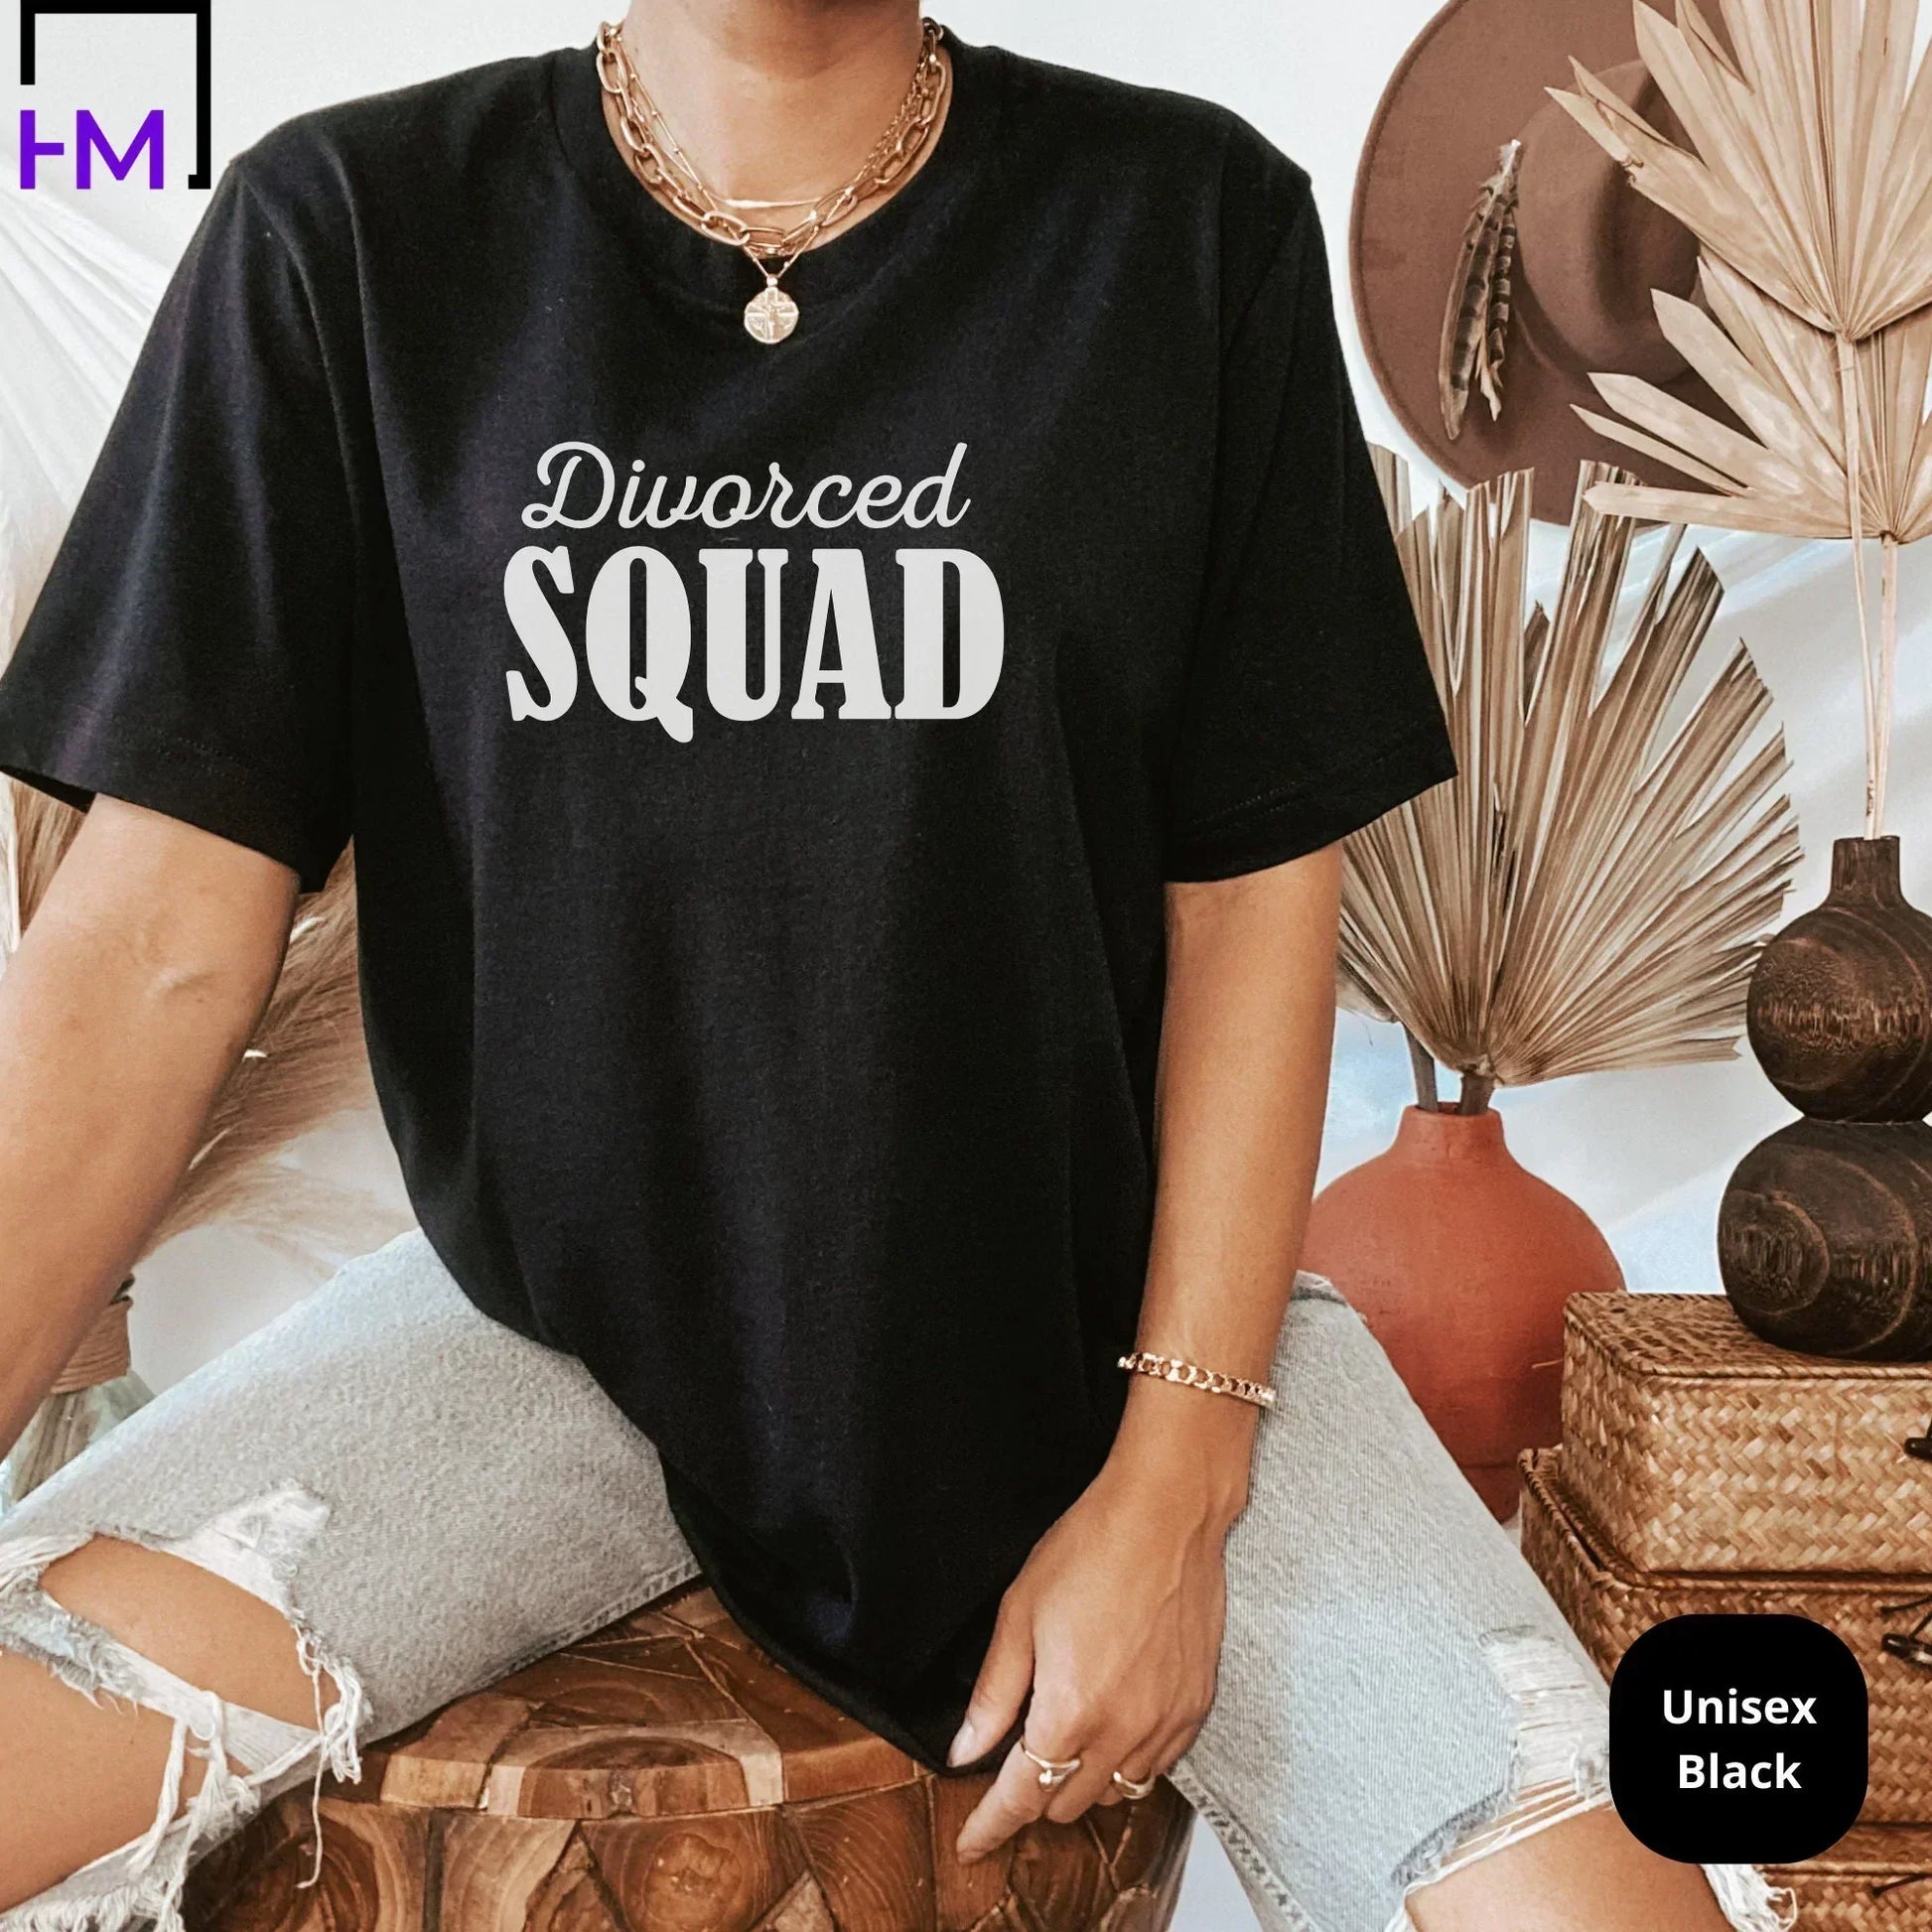 Newly Divorced Shirt, Sarcastic Divorce Squad T-Shirt, Divorcee Gifts, New Beginnings Gifts, New Beginnings for Divorced, Divorce Party Gift HMDesignStudioUS